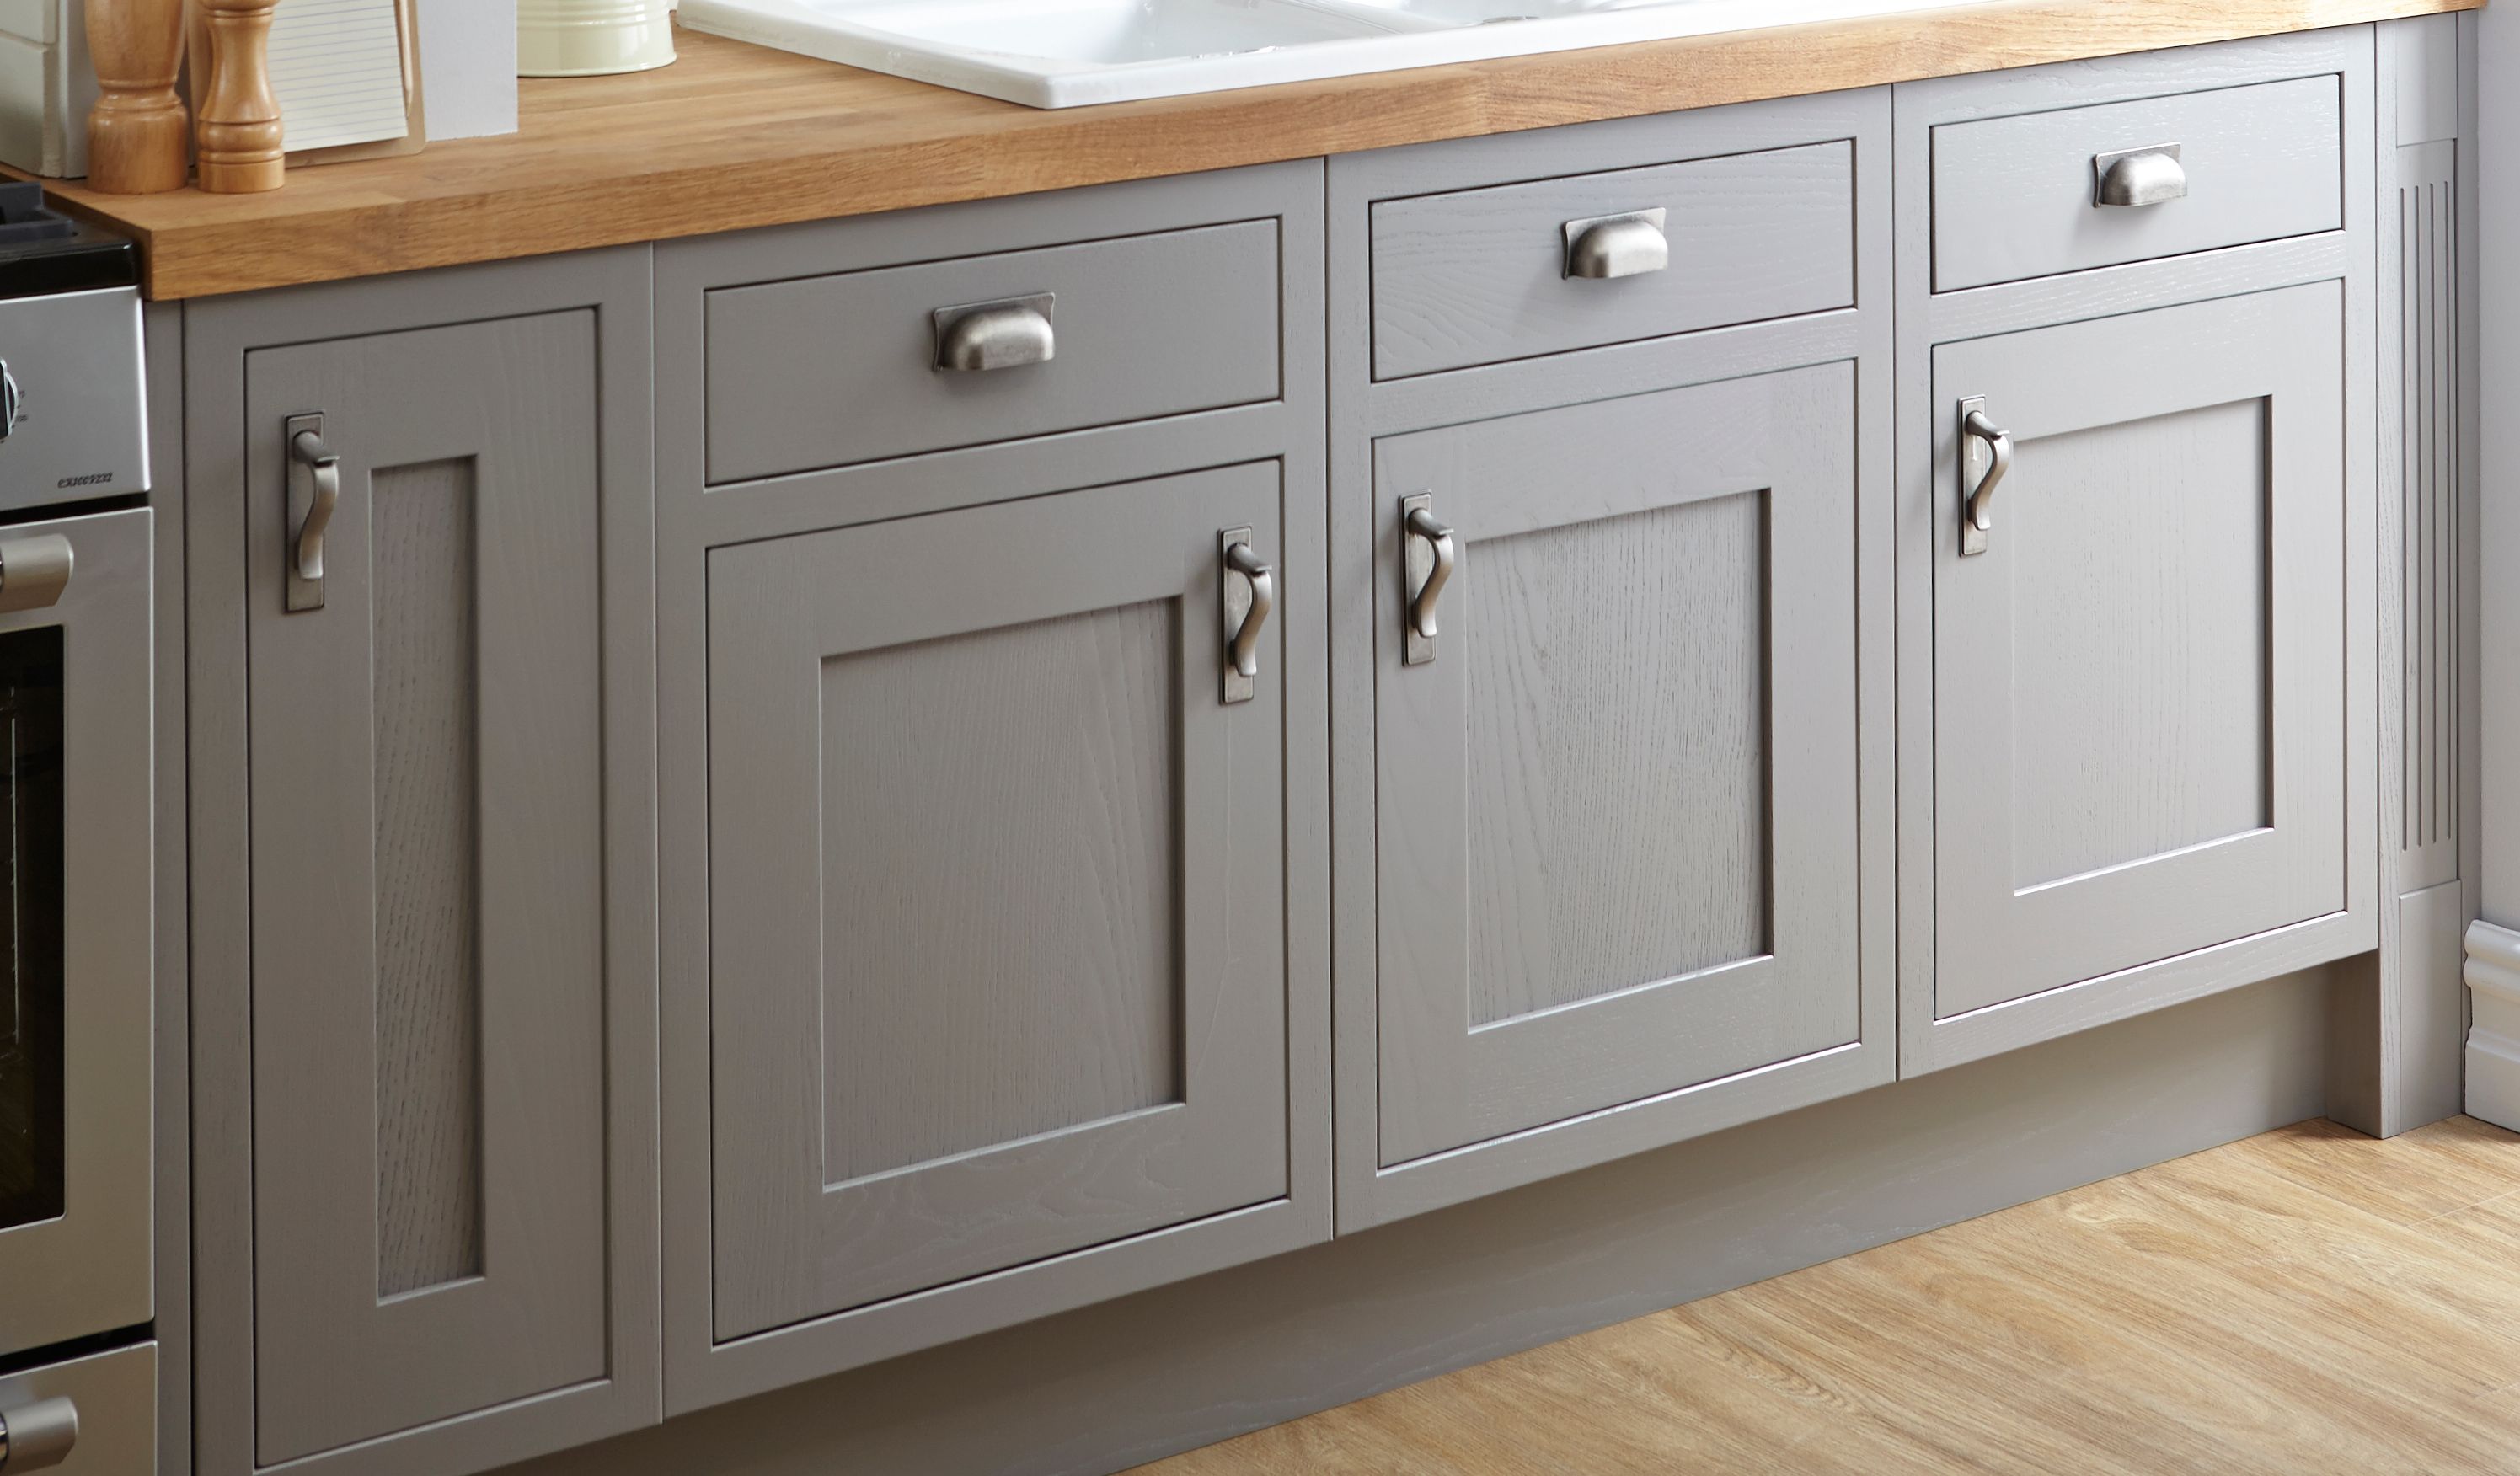 Cabinet Door Options For Your Kitchen Remodel Medford Design Build